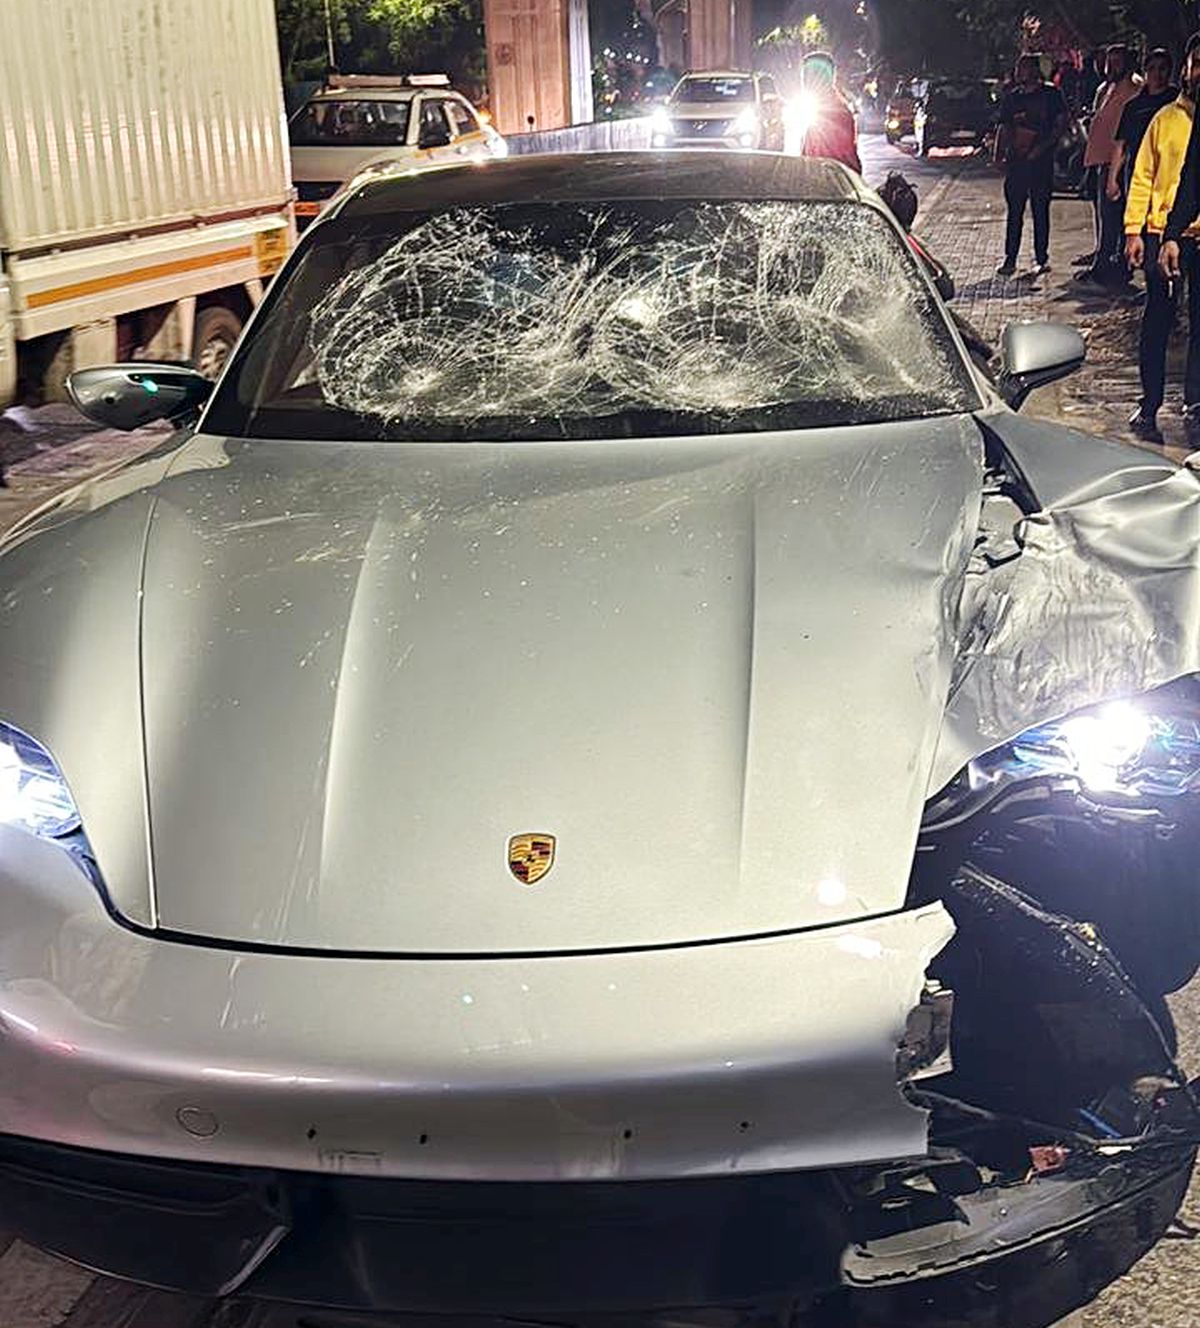 The Porsche that was damaged in the crash